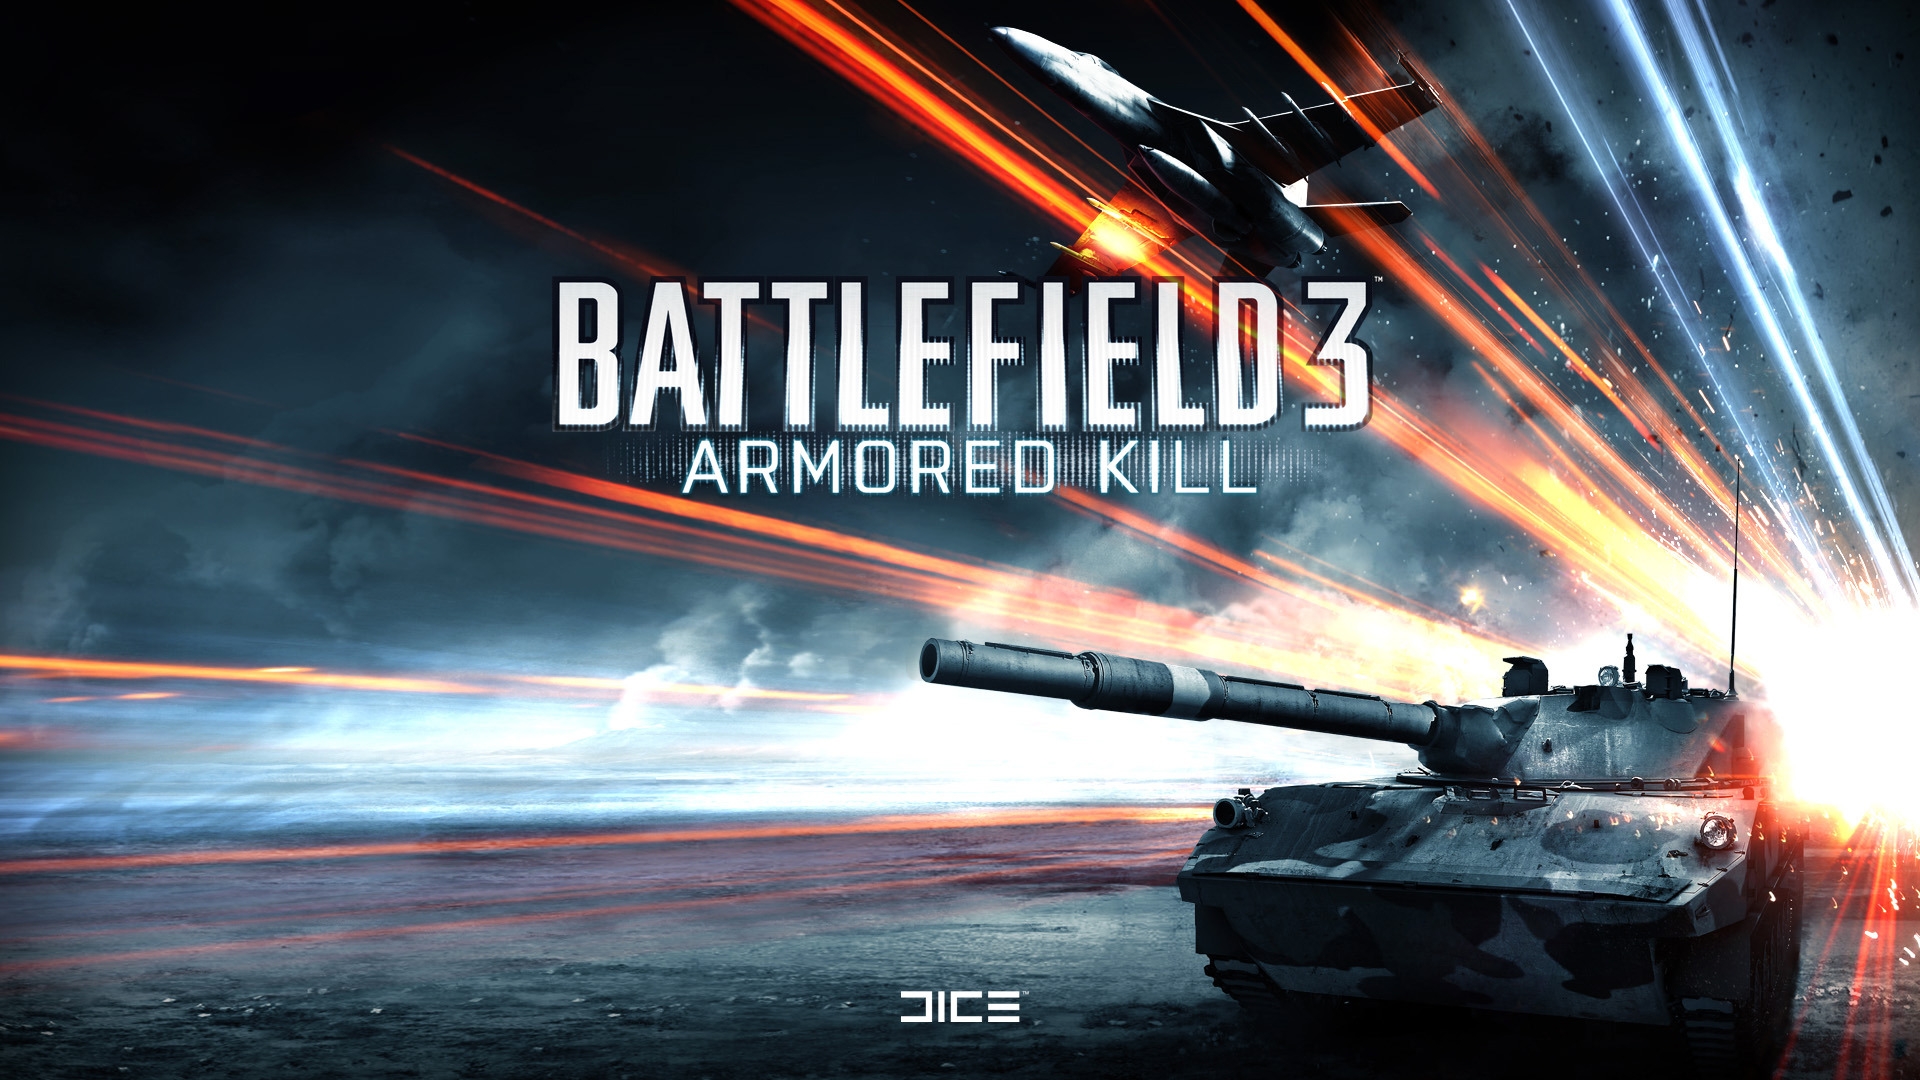 Battlefield 3 Armored Kill for 1920 x 1080 HDTV 1080p resolution